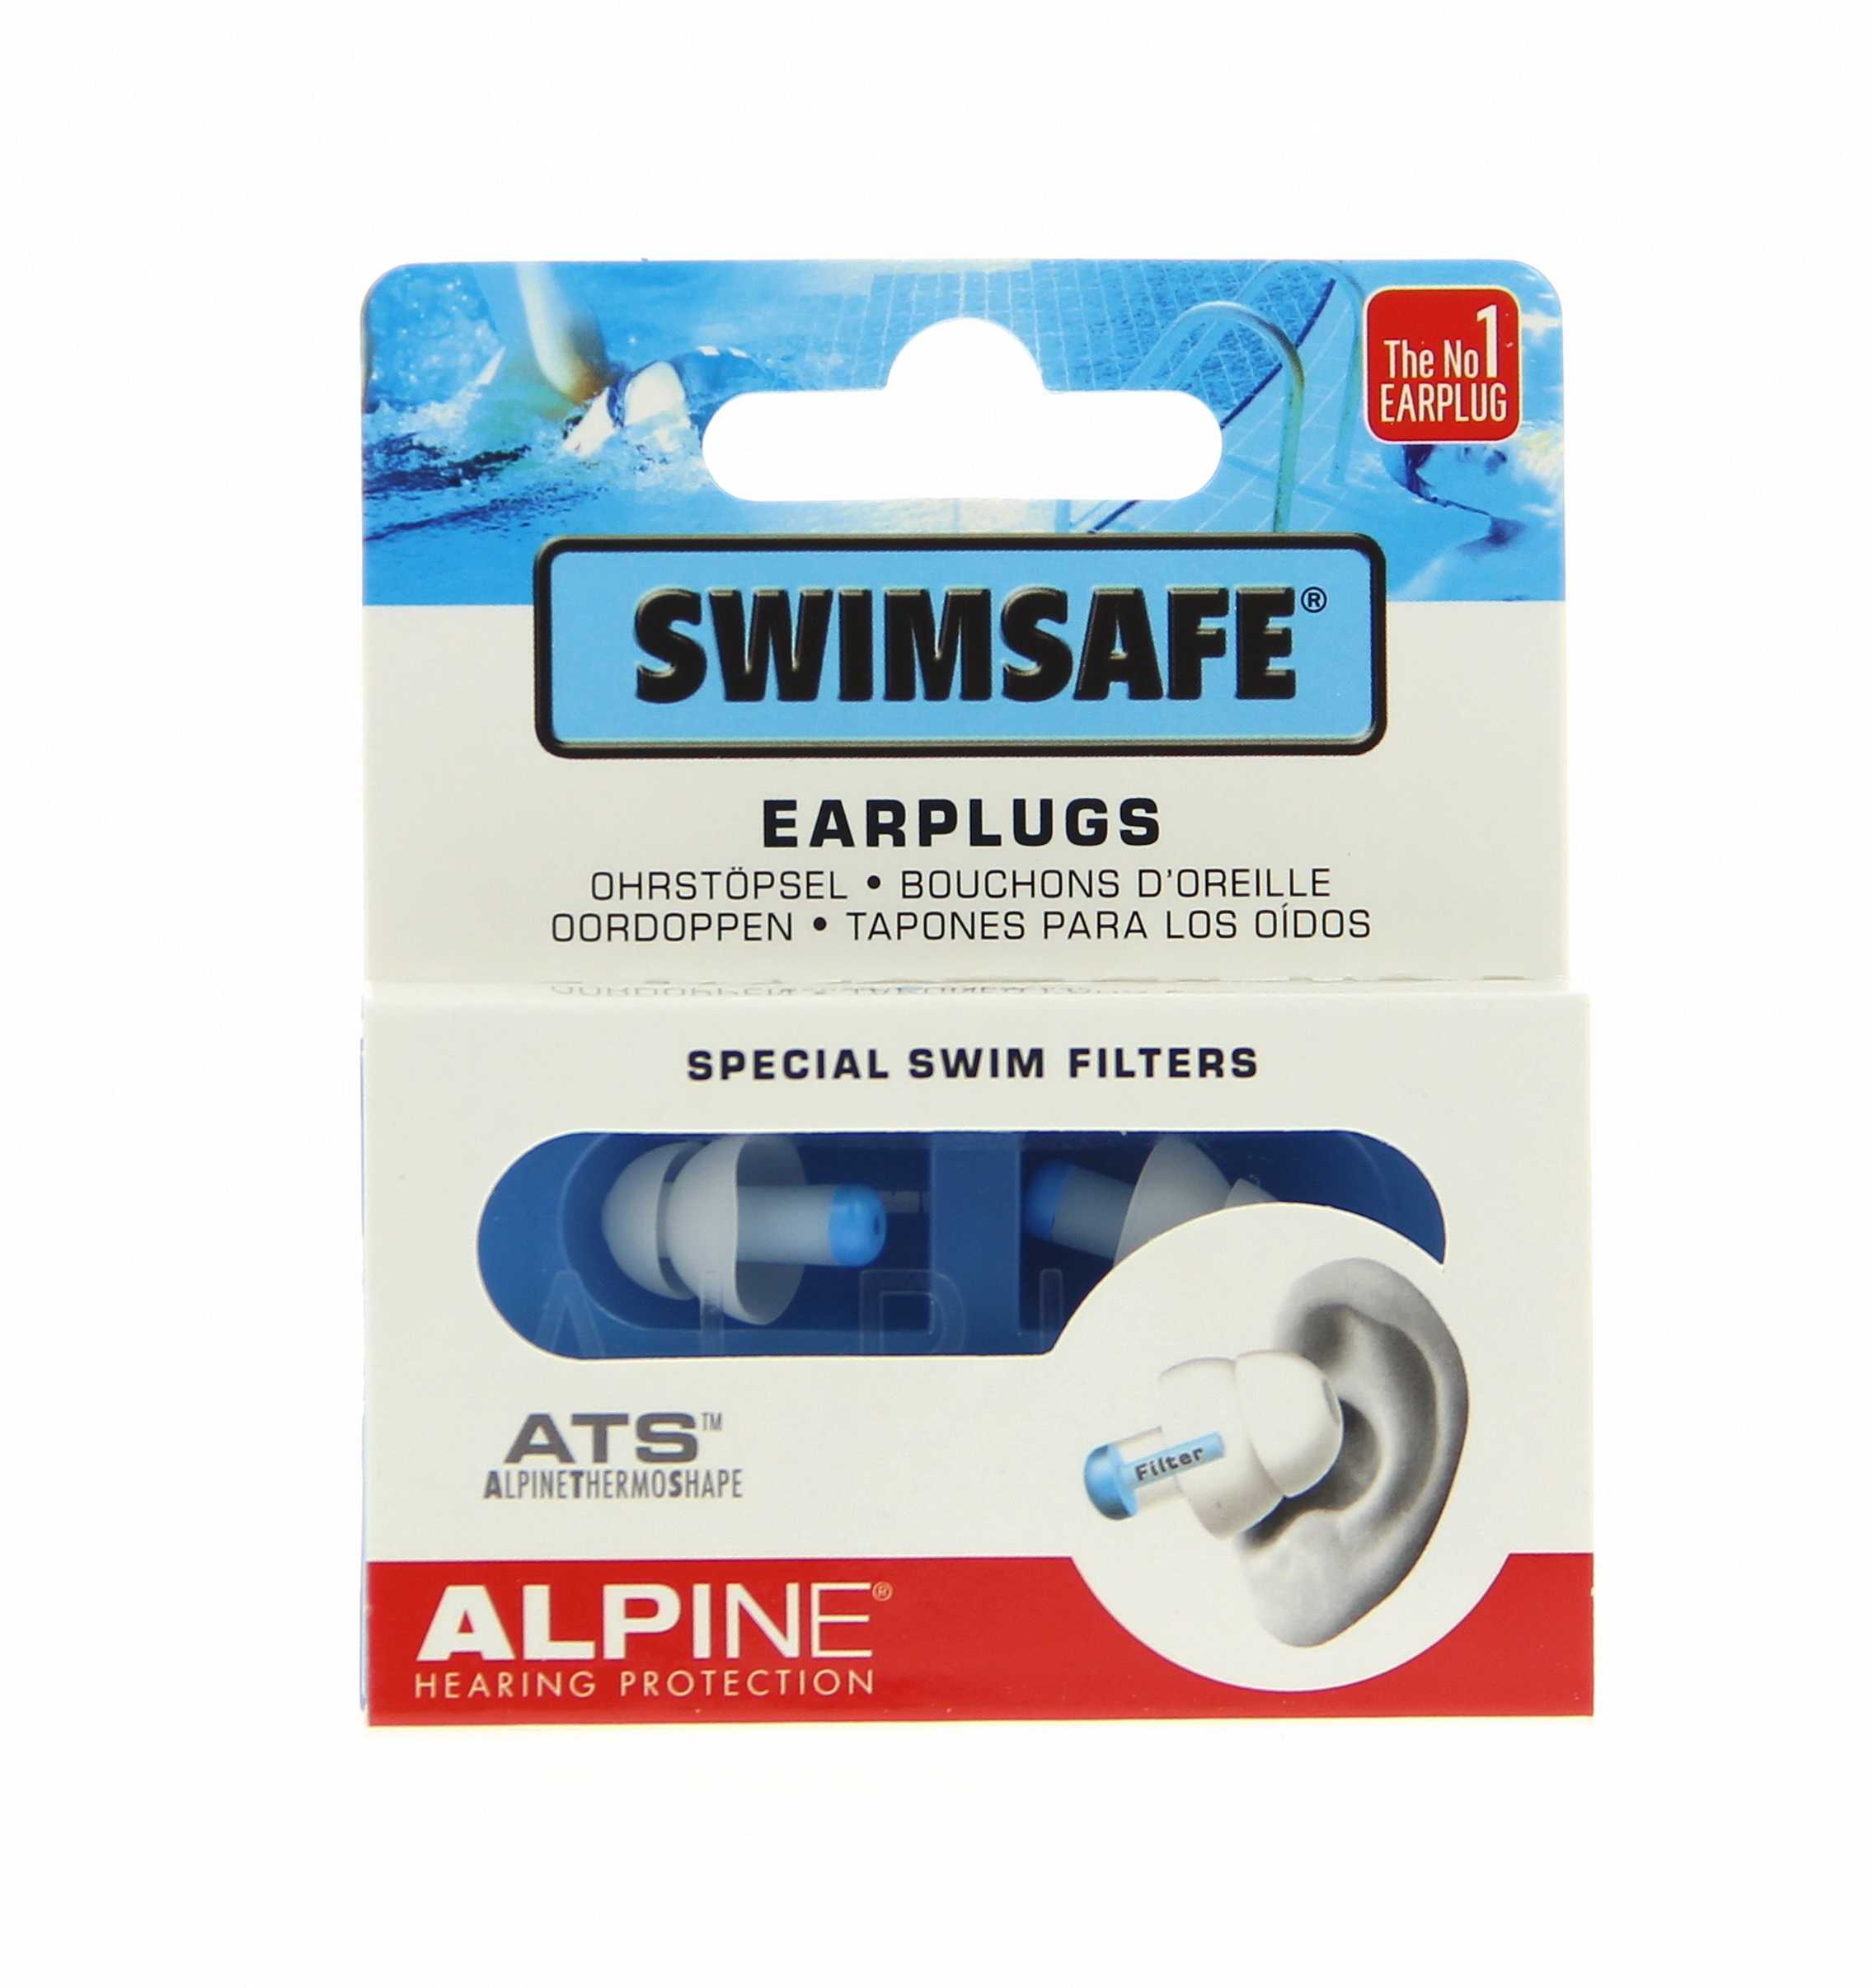  Bouchons d'oreille pour nager ALPINE SWIMSAFE BIOTONE